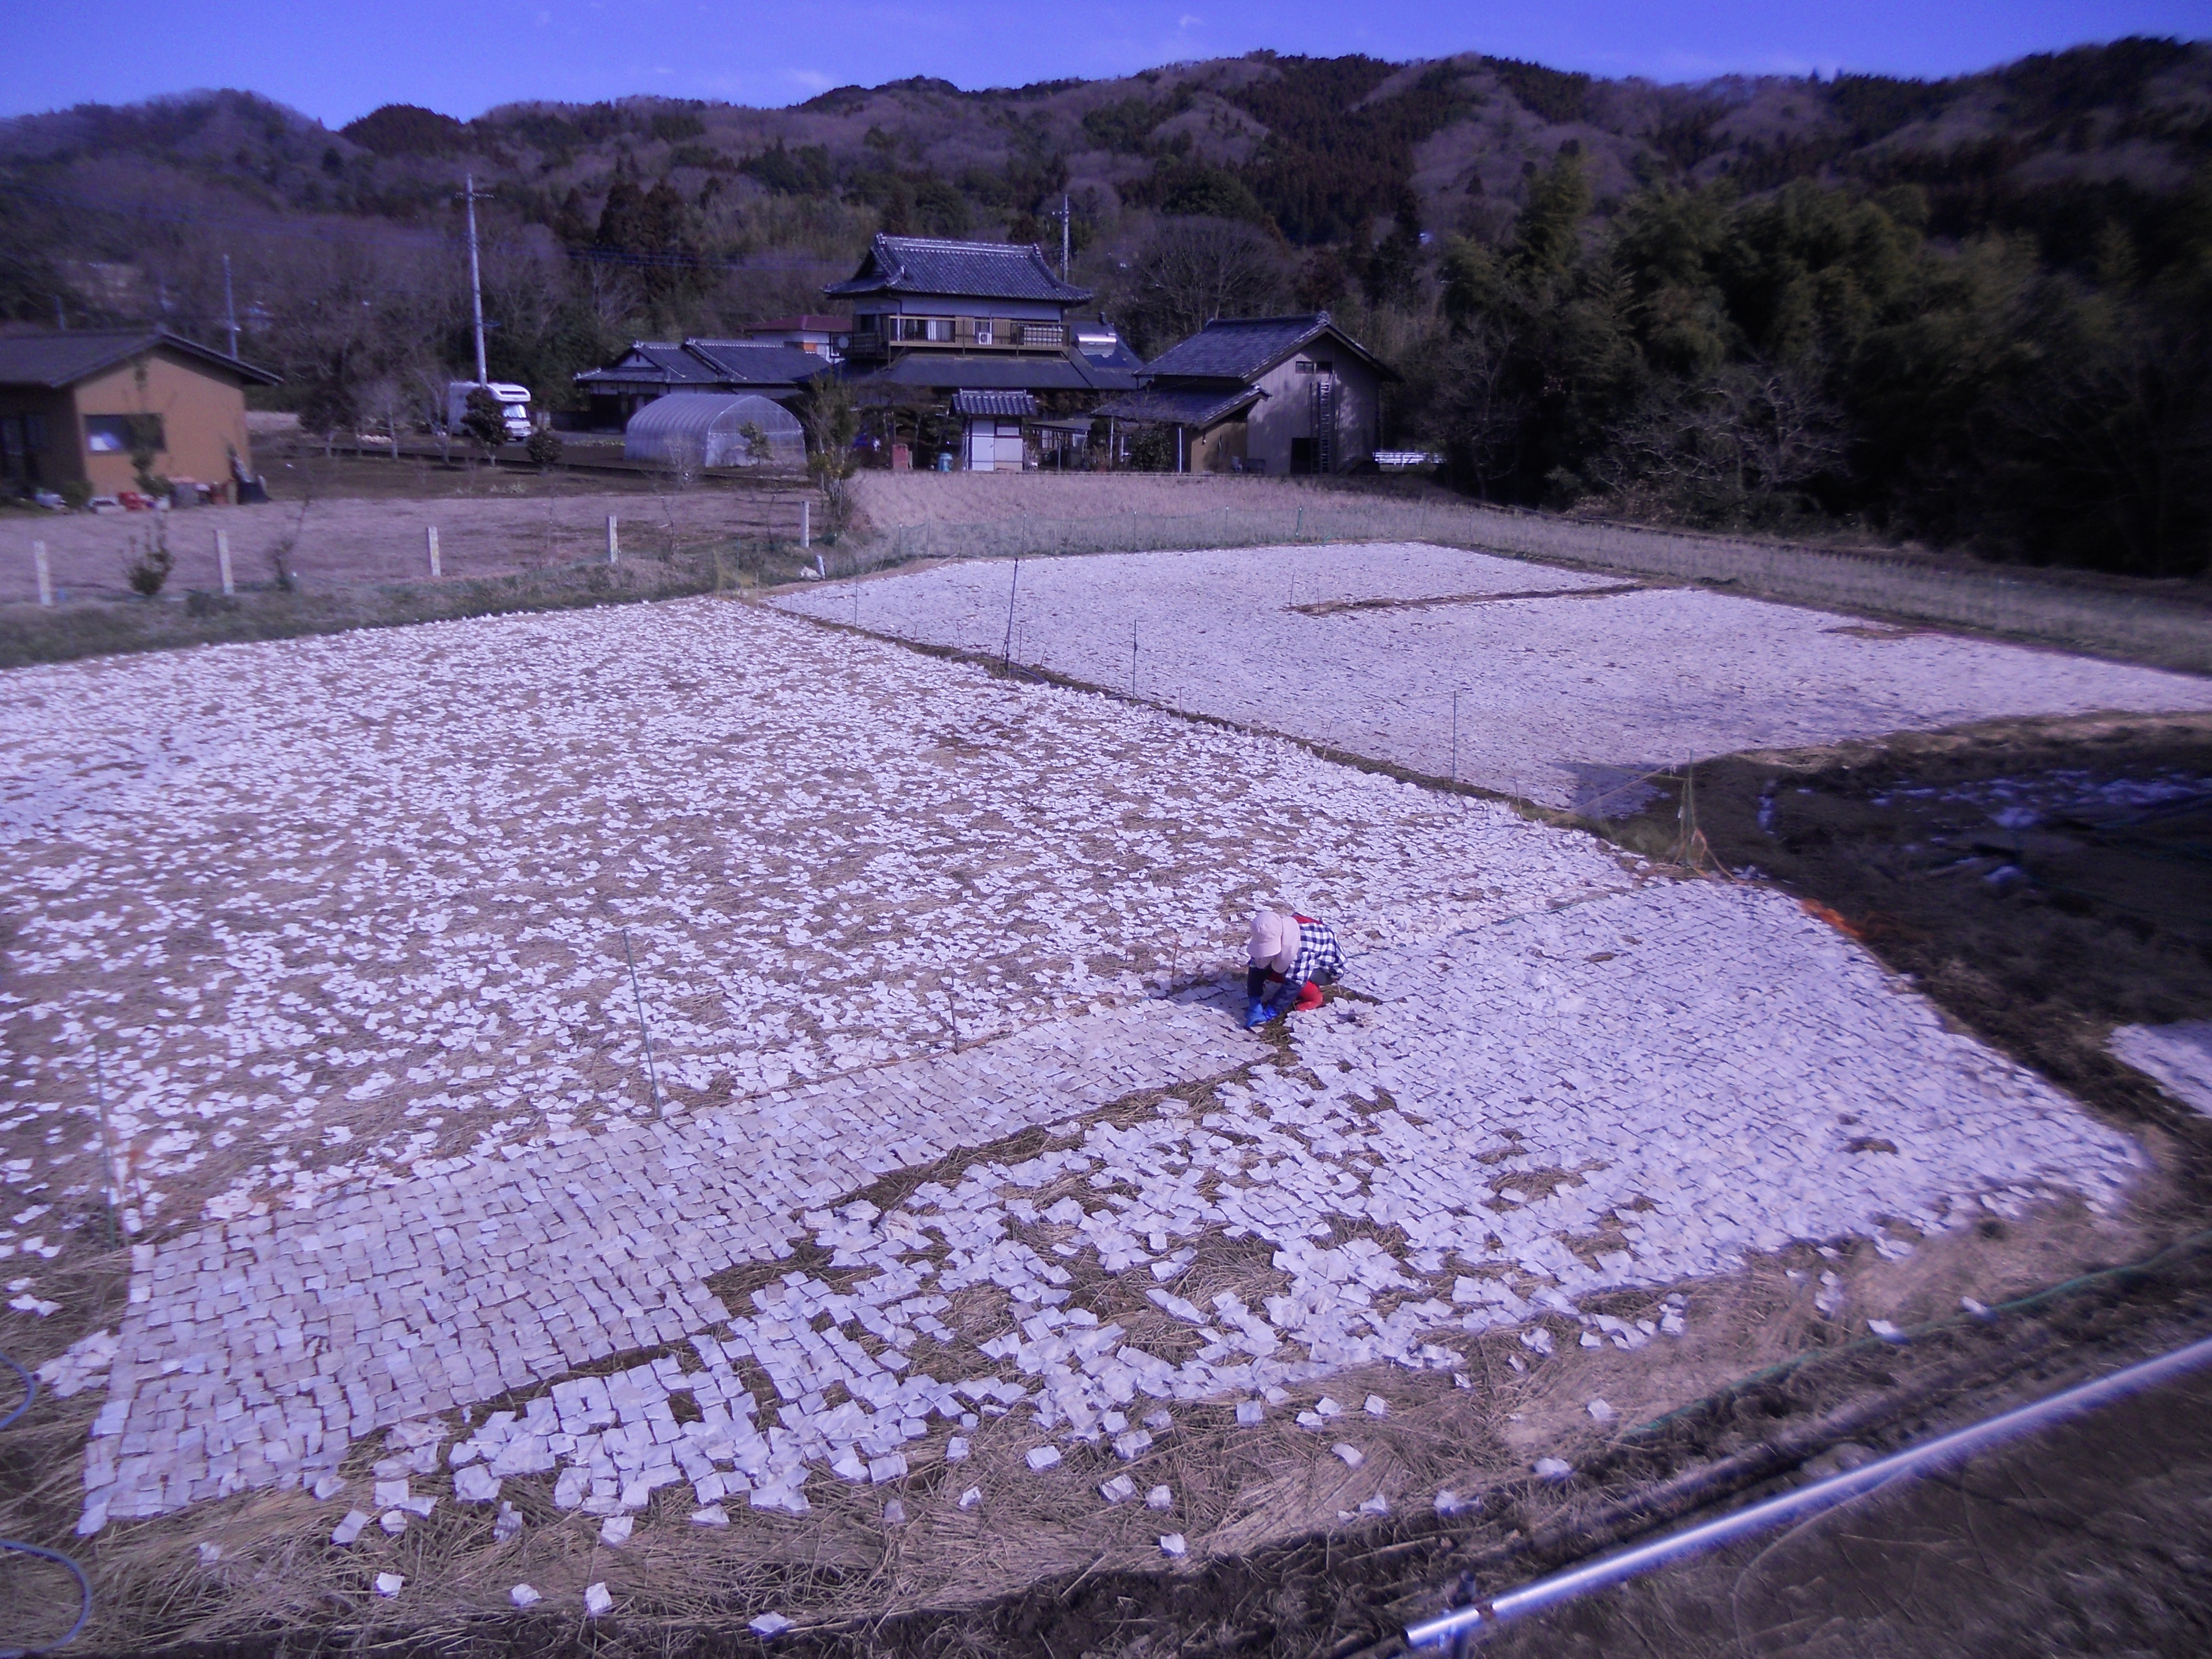 Shimi-konnyaku field